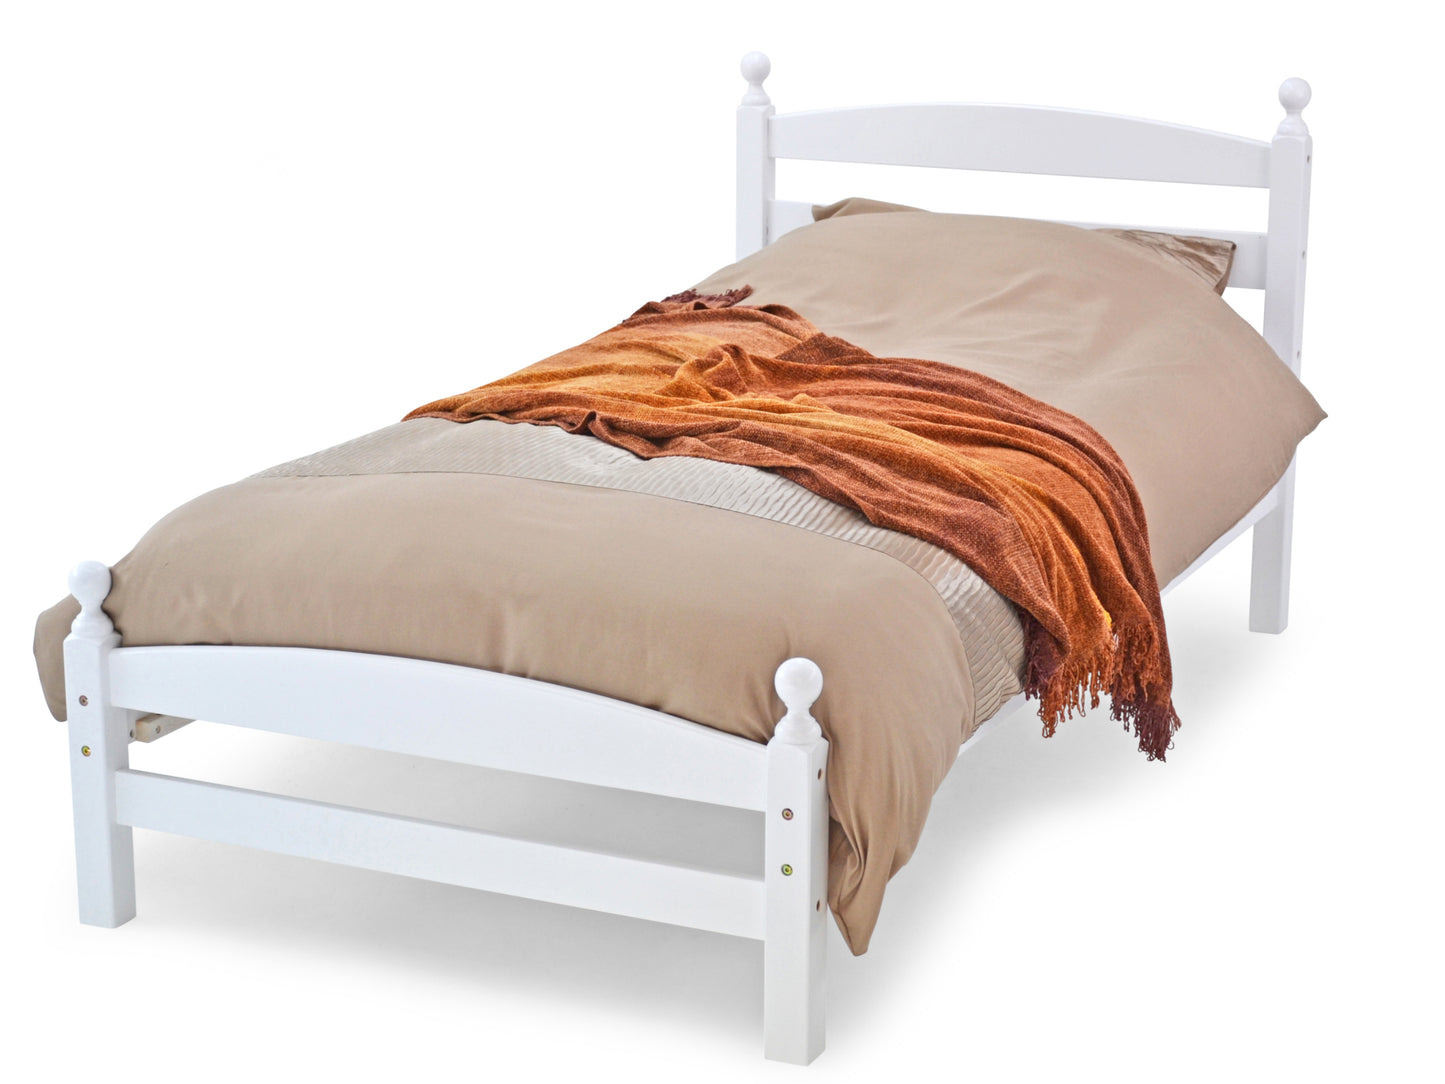 Modella Wooden Bed Frame in White